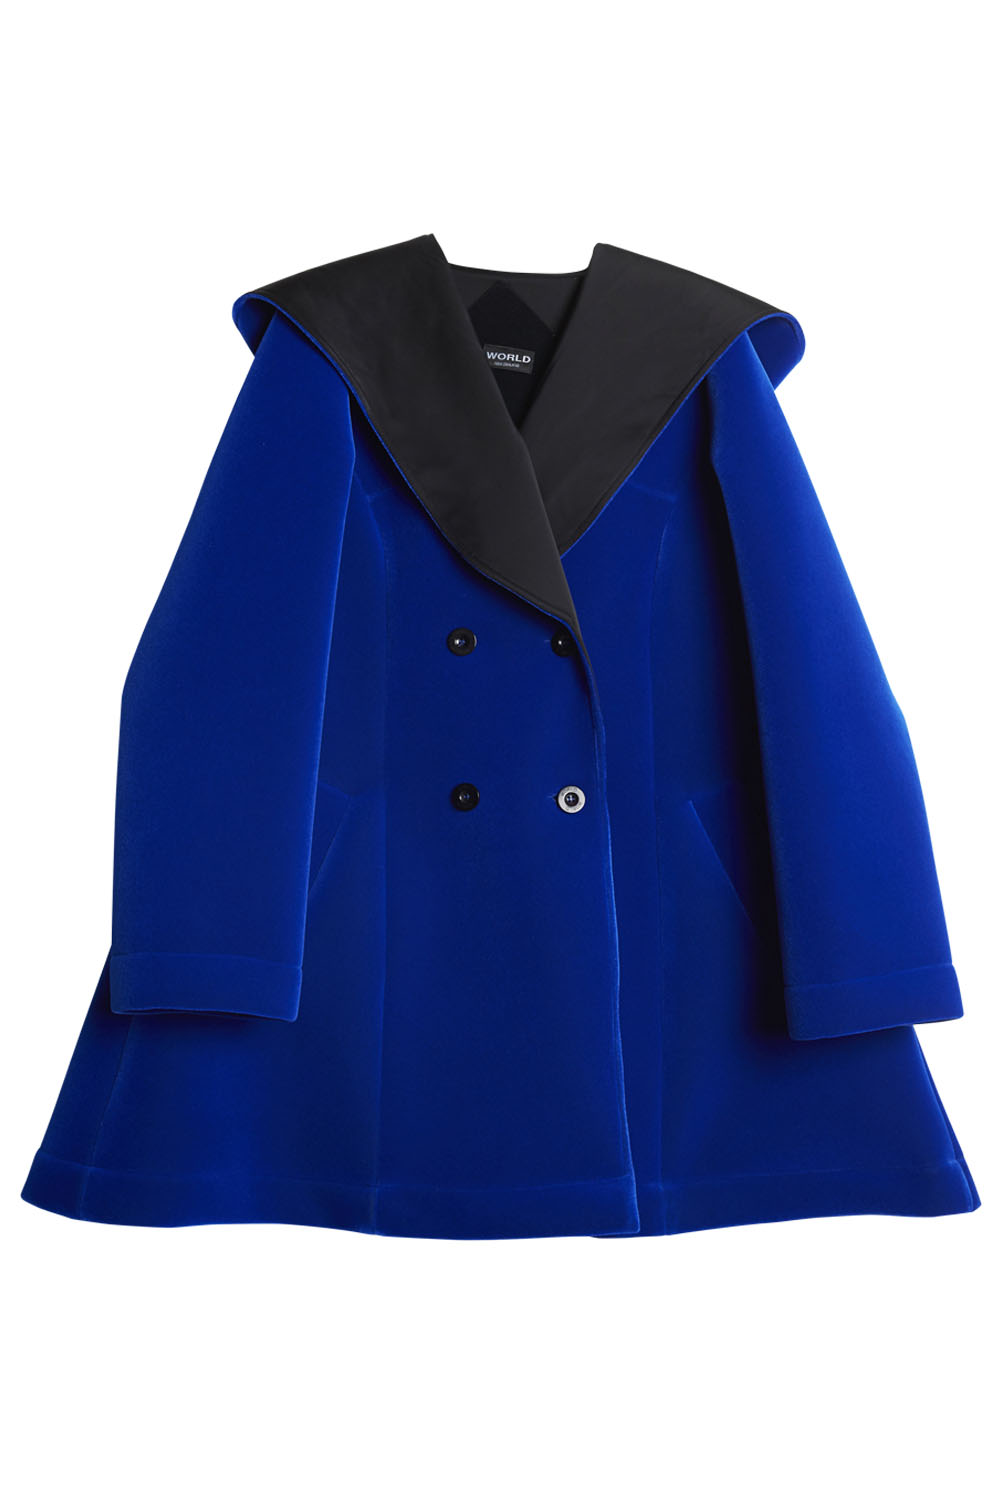 Coat, $599, by World.